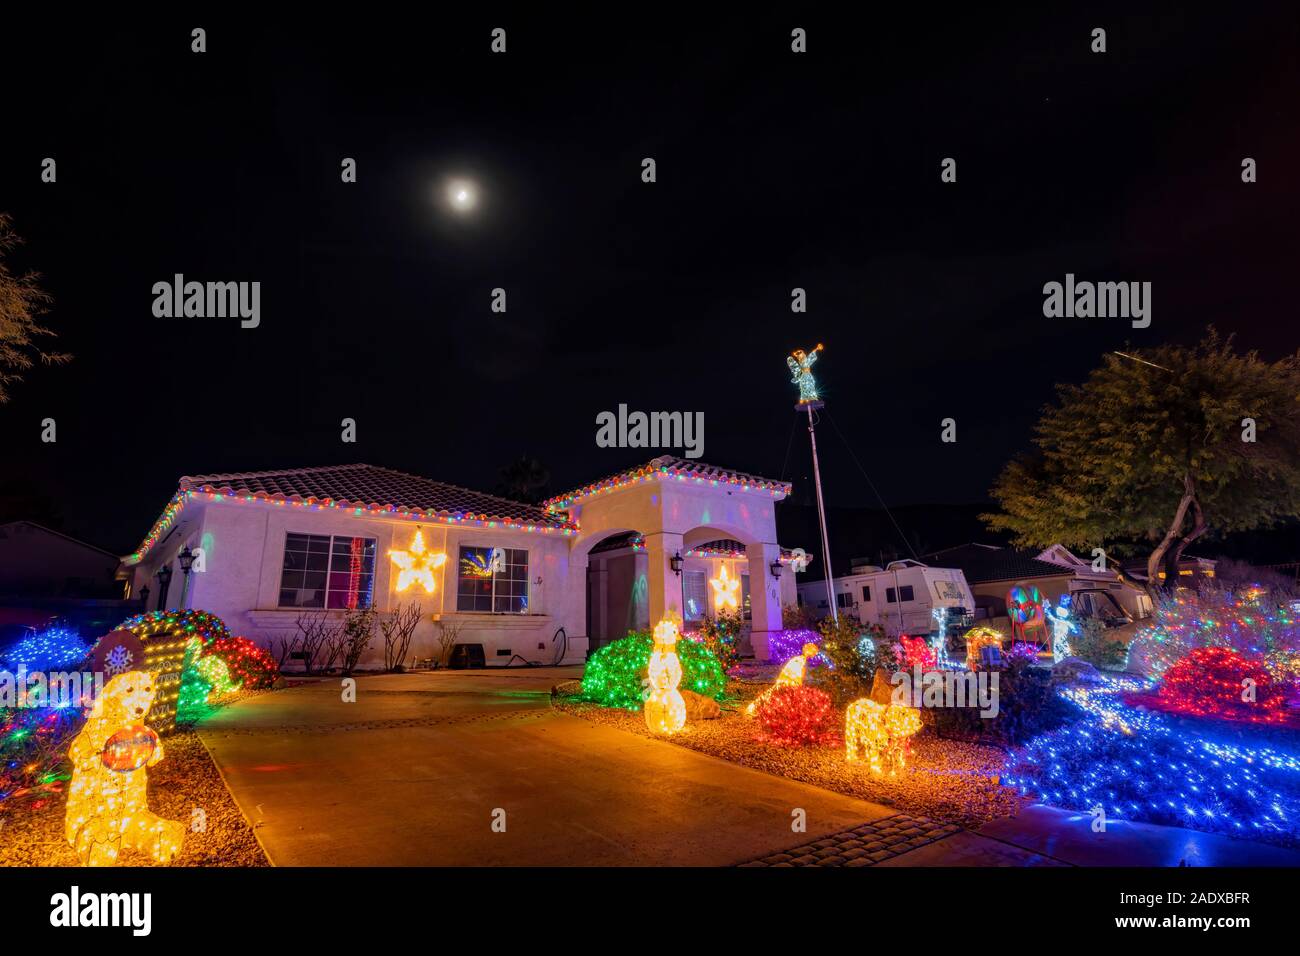 Las Vegas, DEC 2: Christmas lights, decoration of a house on DEC 2, 2019 at Las Vegas, Henderson Stock Photo